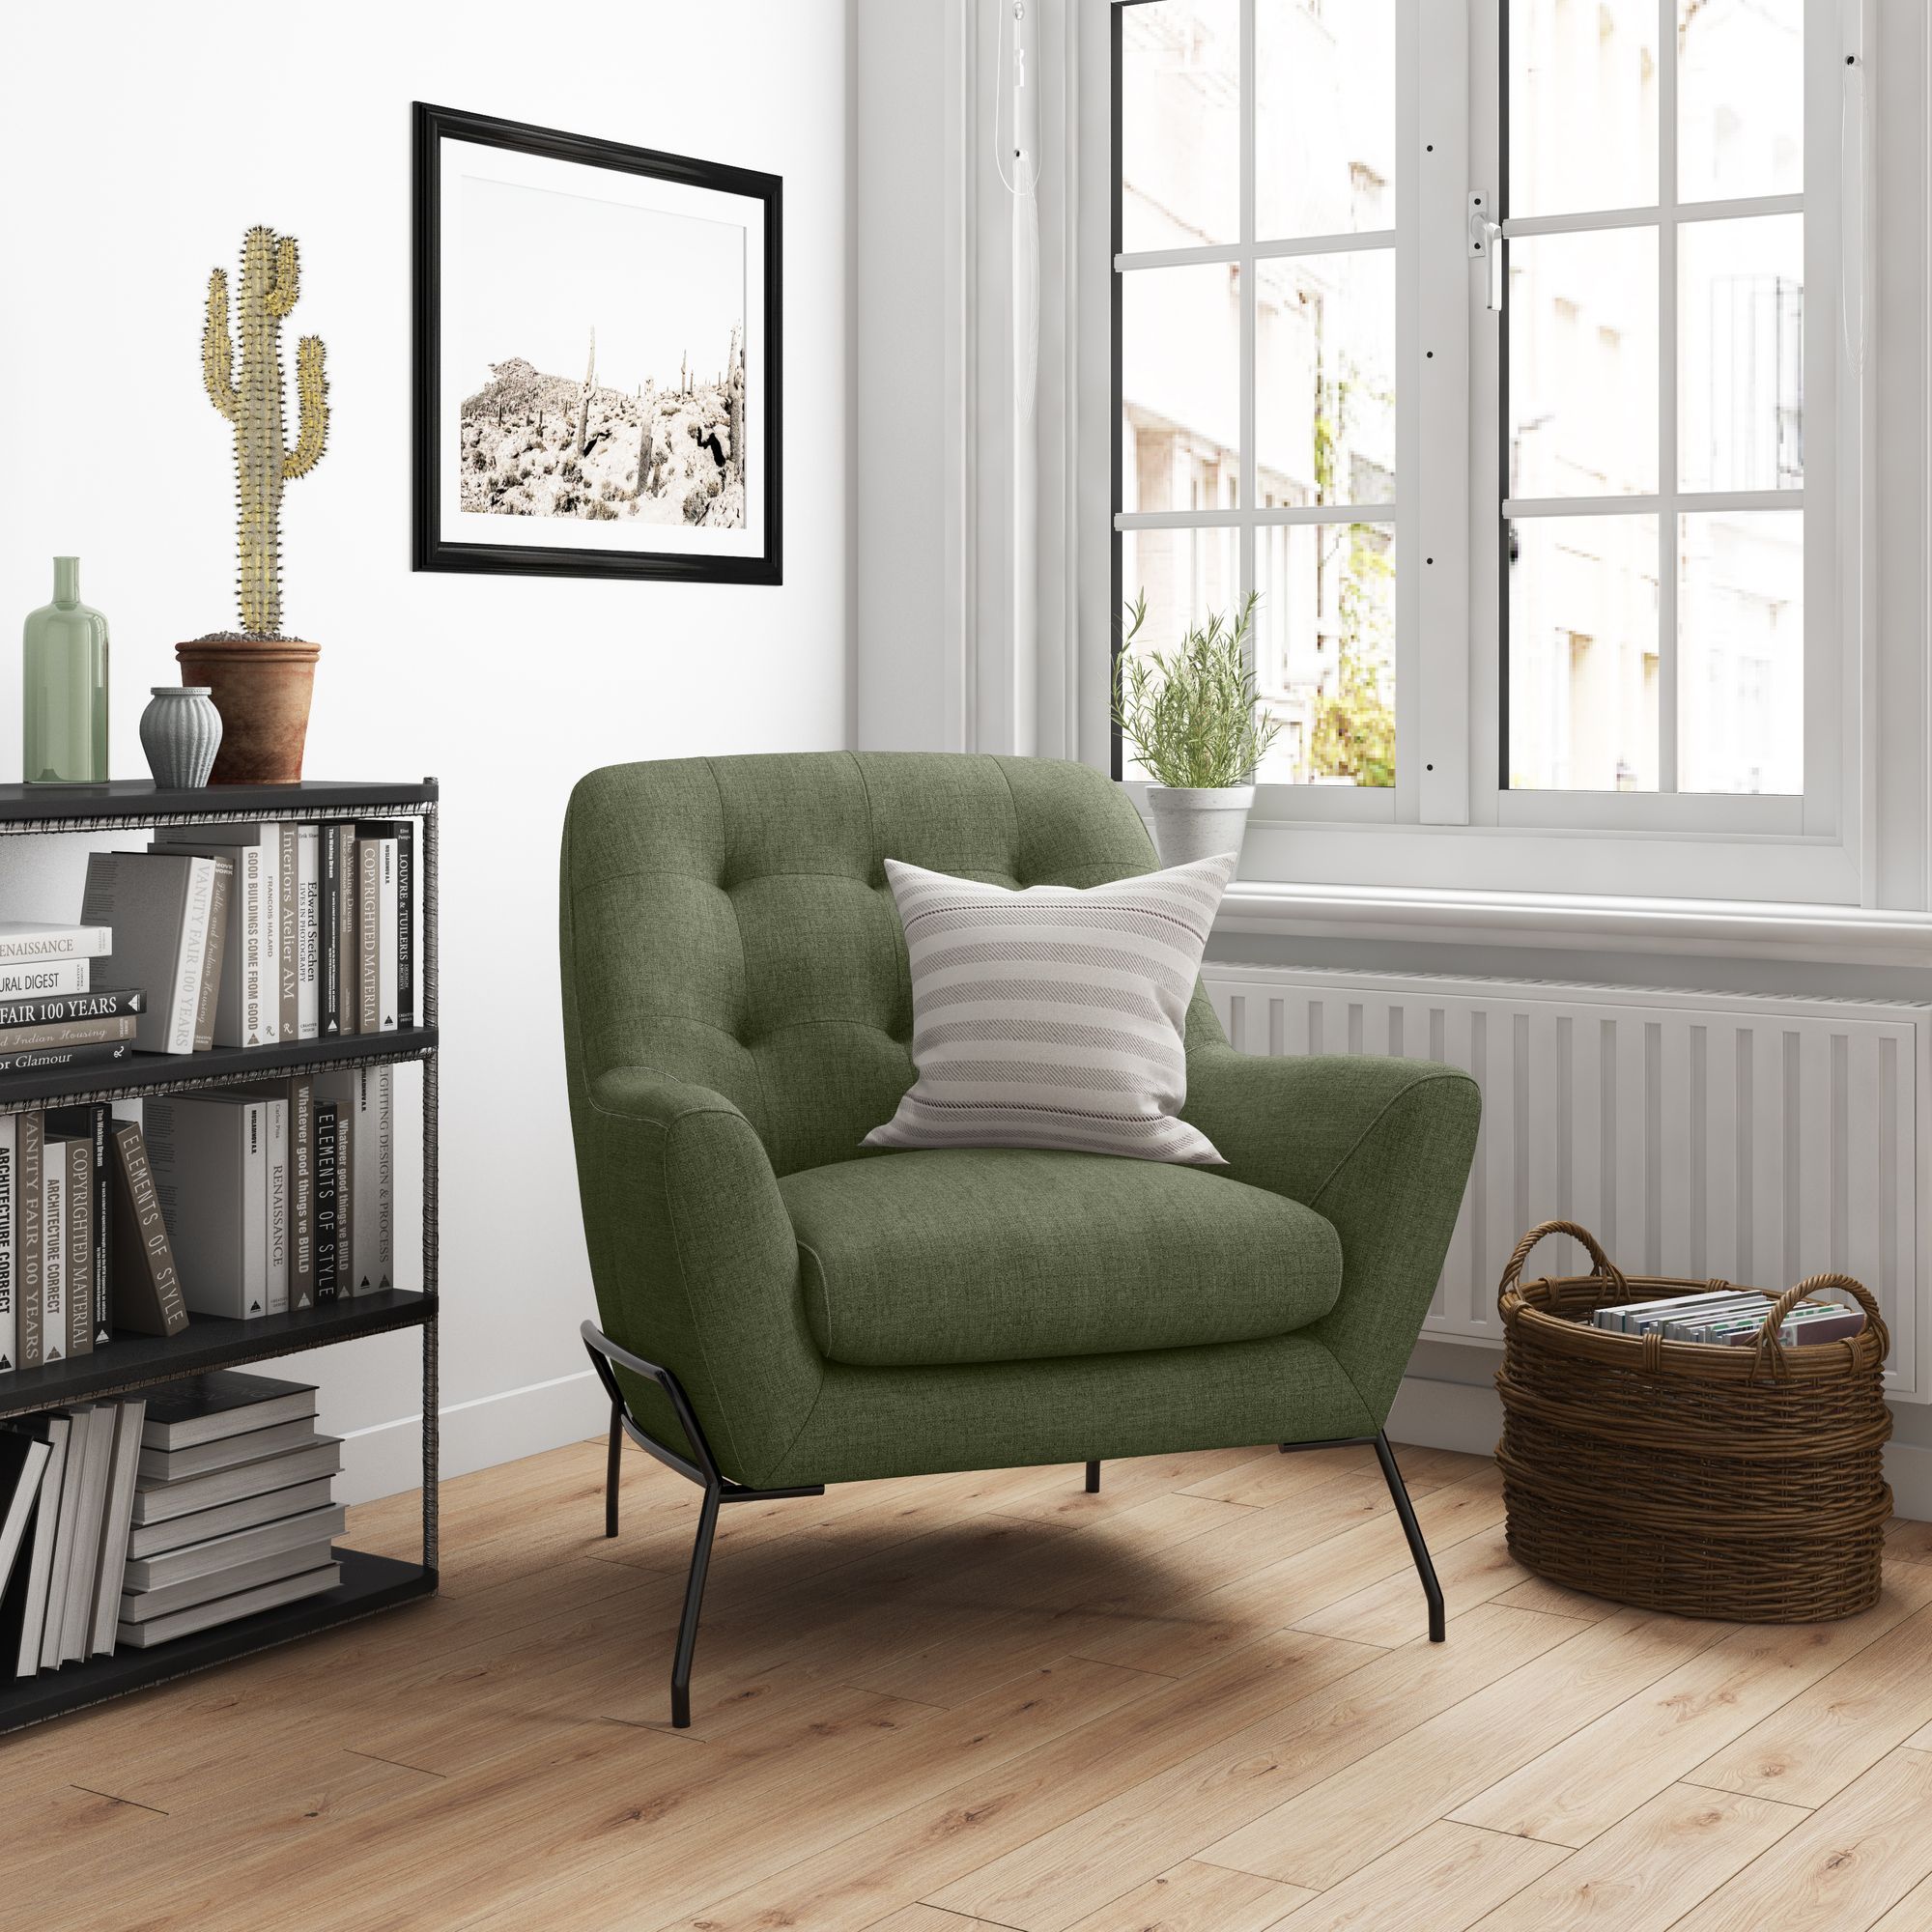 Dorel Living Nashville Modern Accent Chair -   17 sage green living room walls ideas